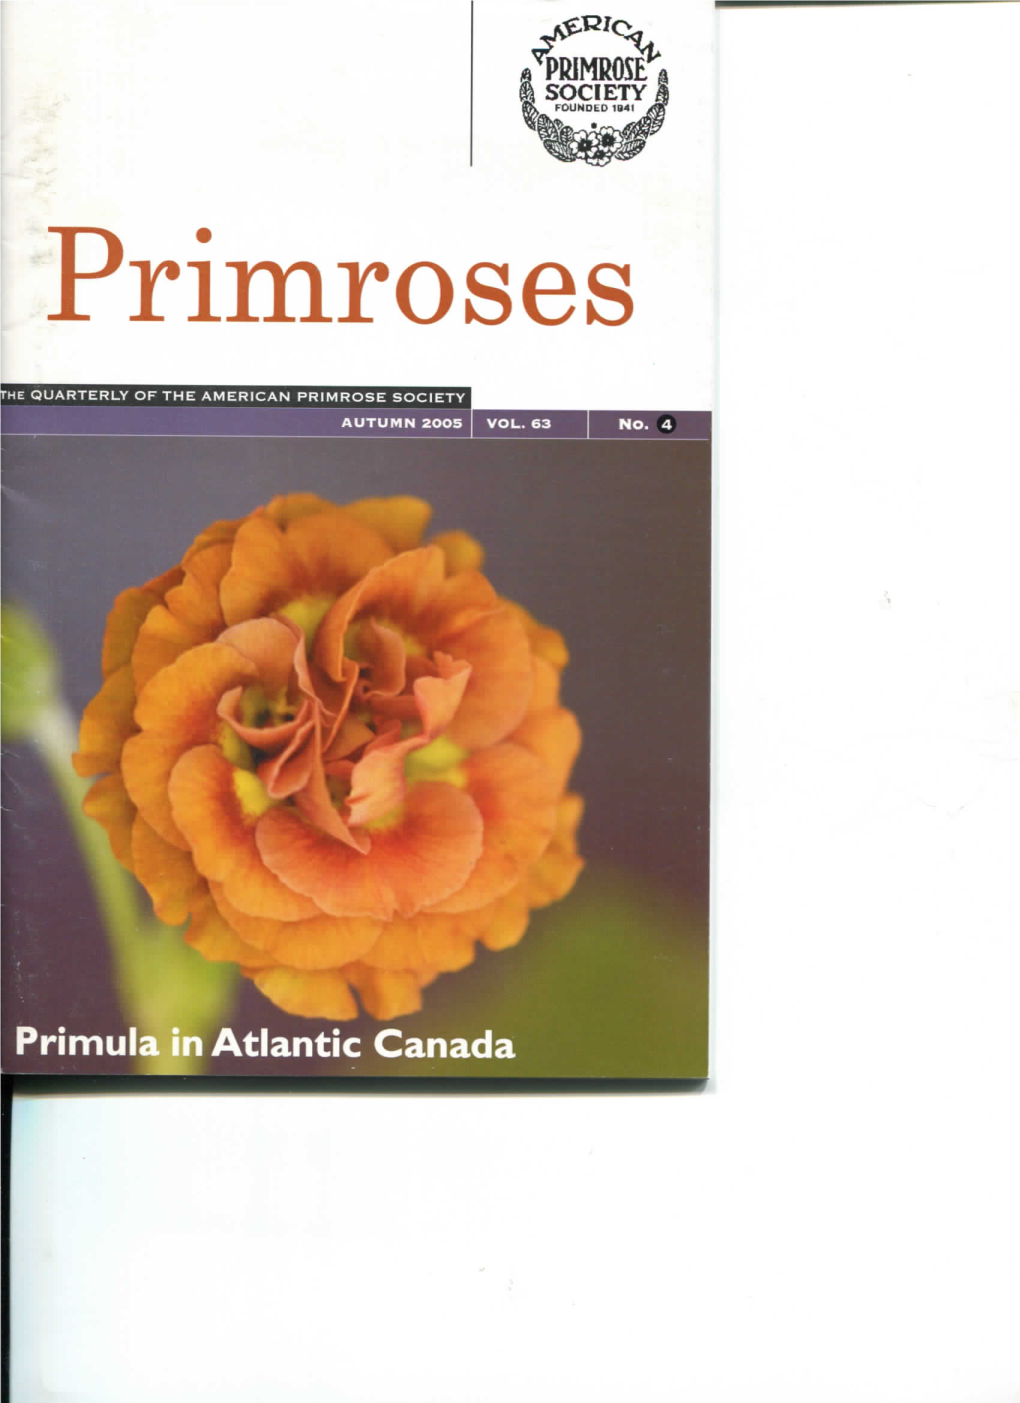 The American Primrose Society